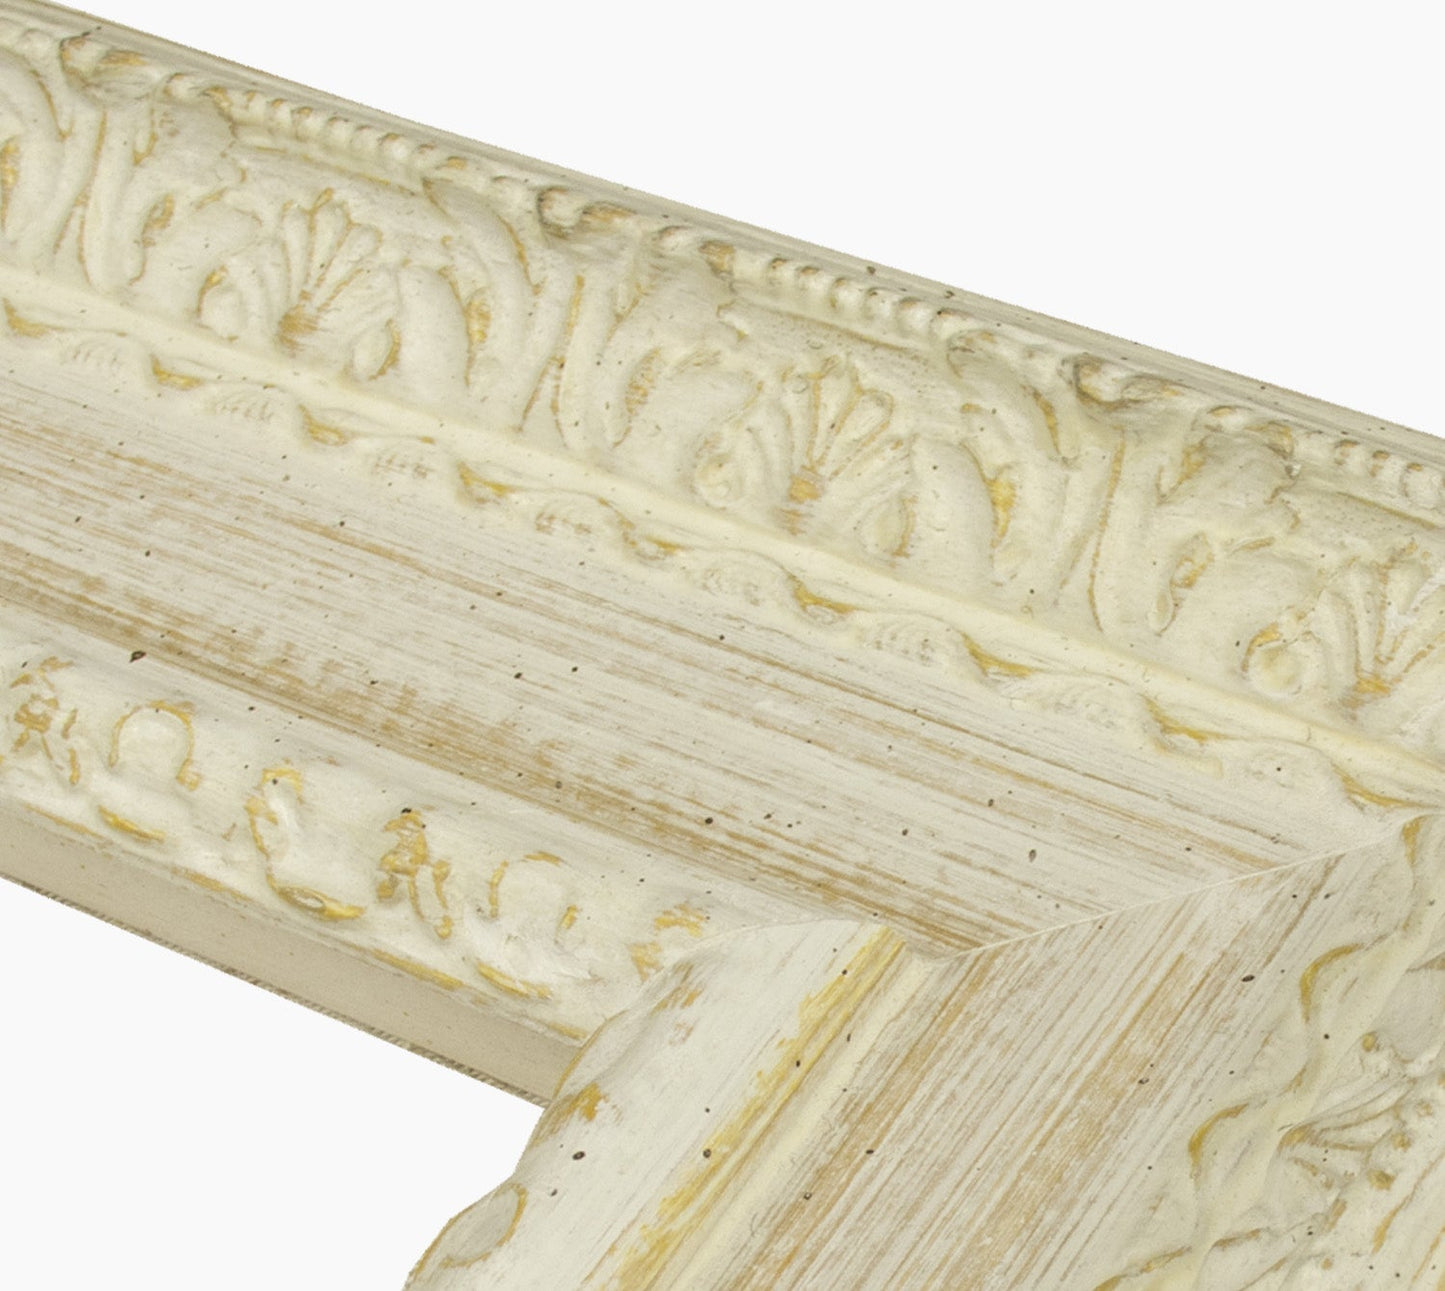 743.915 cadre en bois à fond ocre blanc mesure de profil 100x53 mm Lombarda cornici S.n.c.